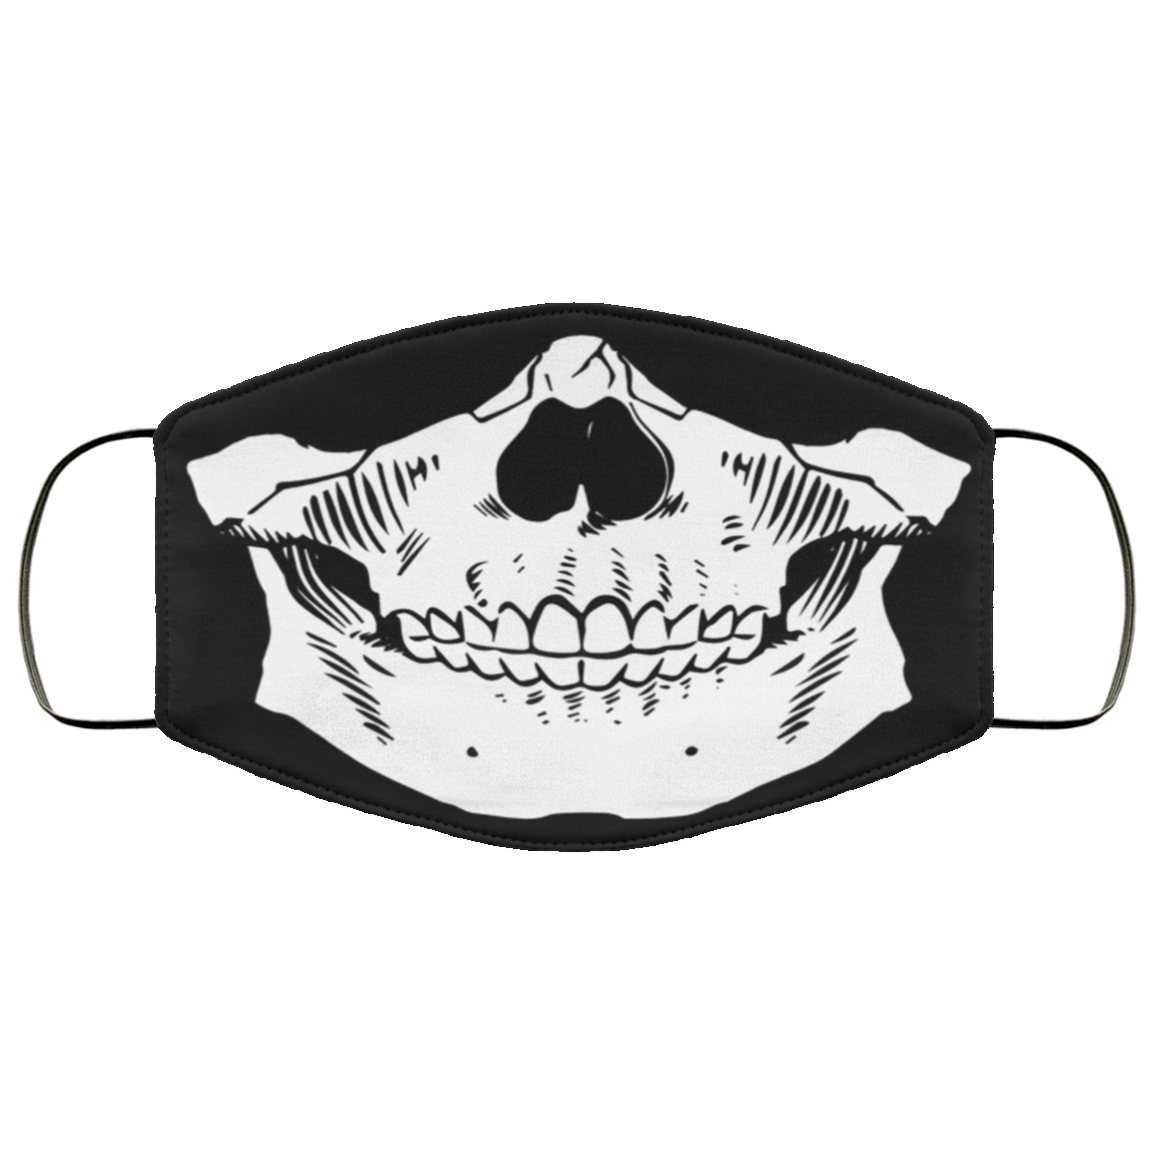 functions 2X Black Microfiber Seamless Skull Face Mask Tube style washable 16 